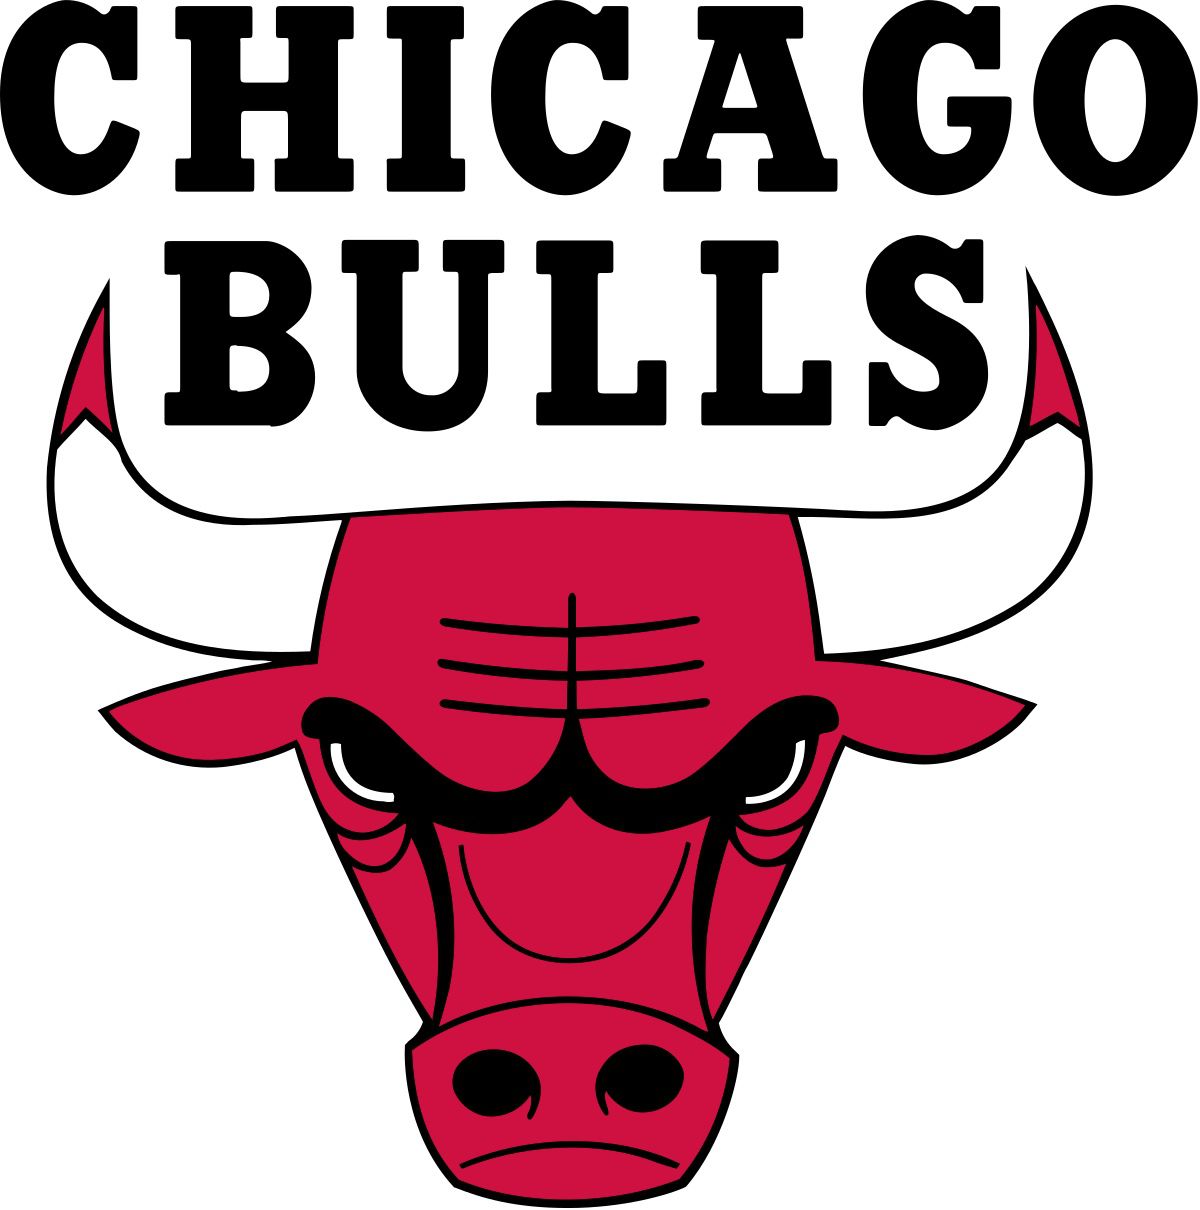 Chicago Bulls Tickets 